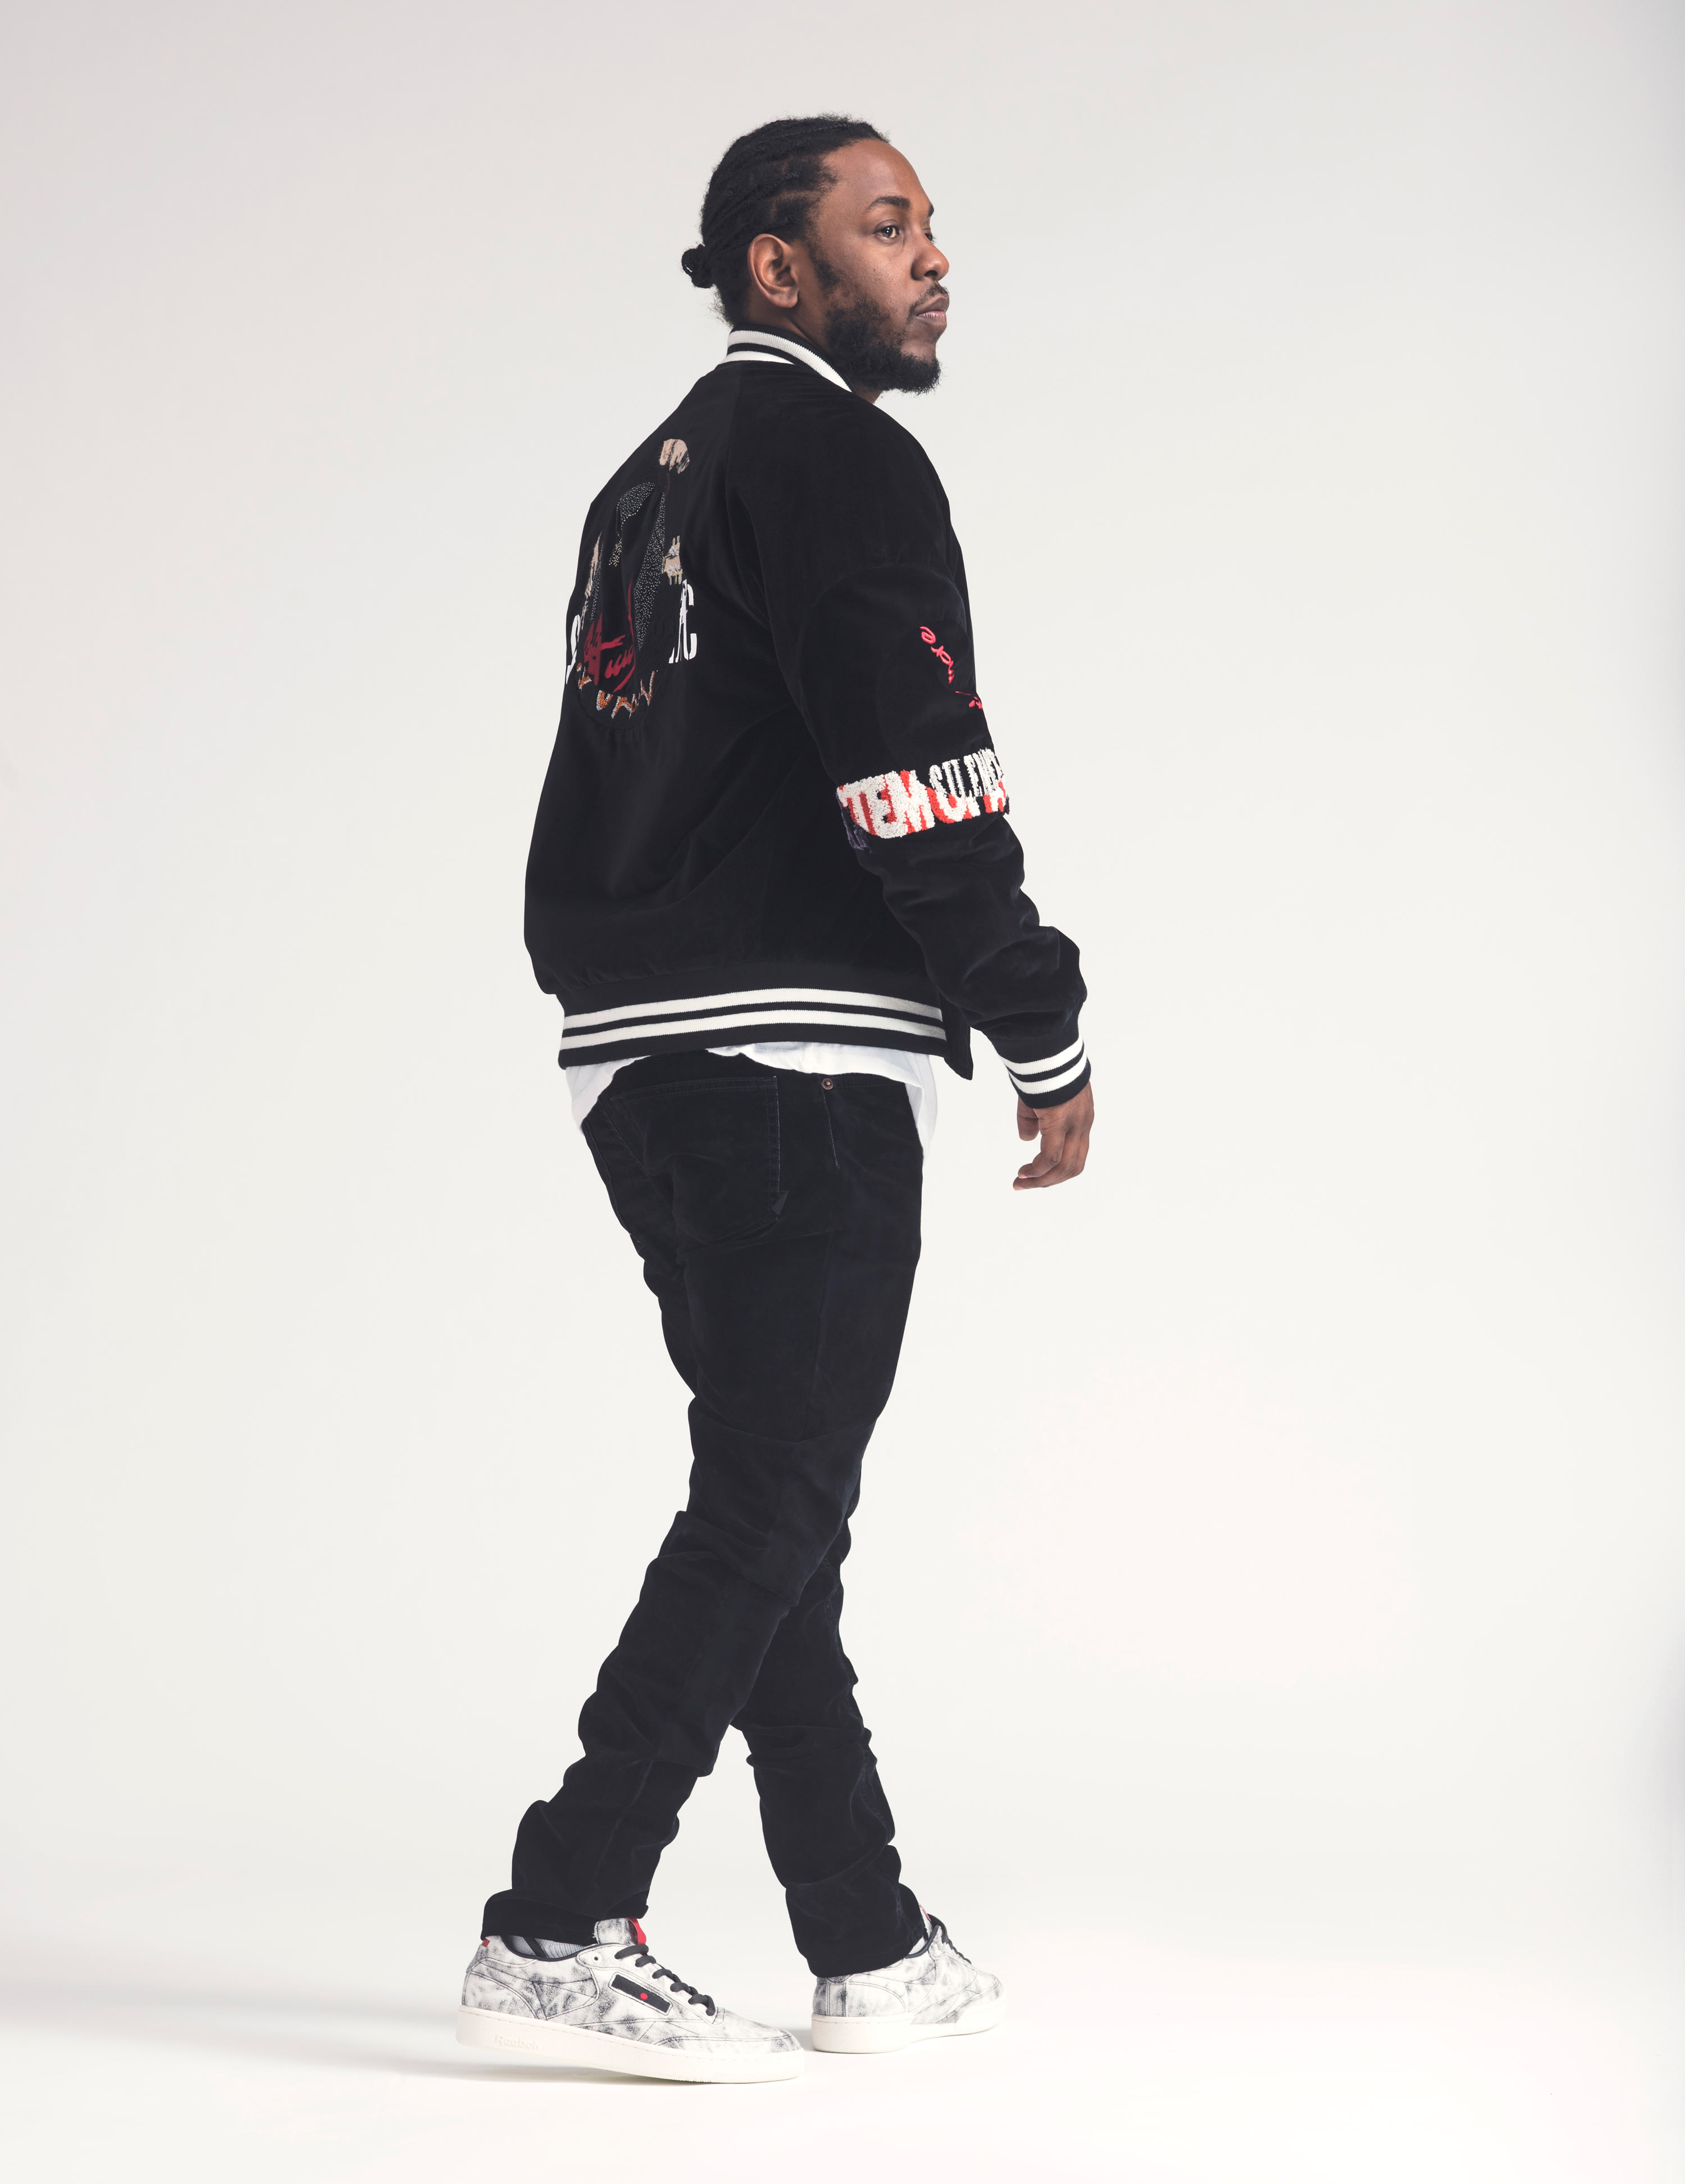 Kendrick Lamar Club C Release Date | Collector